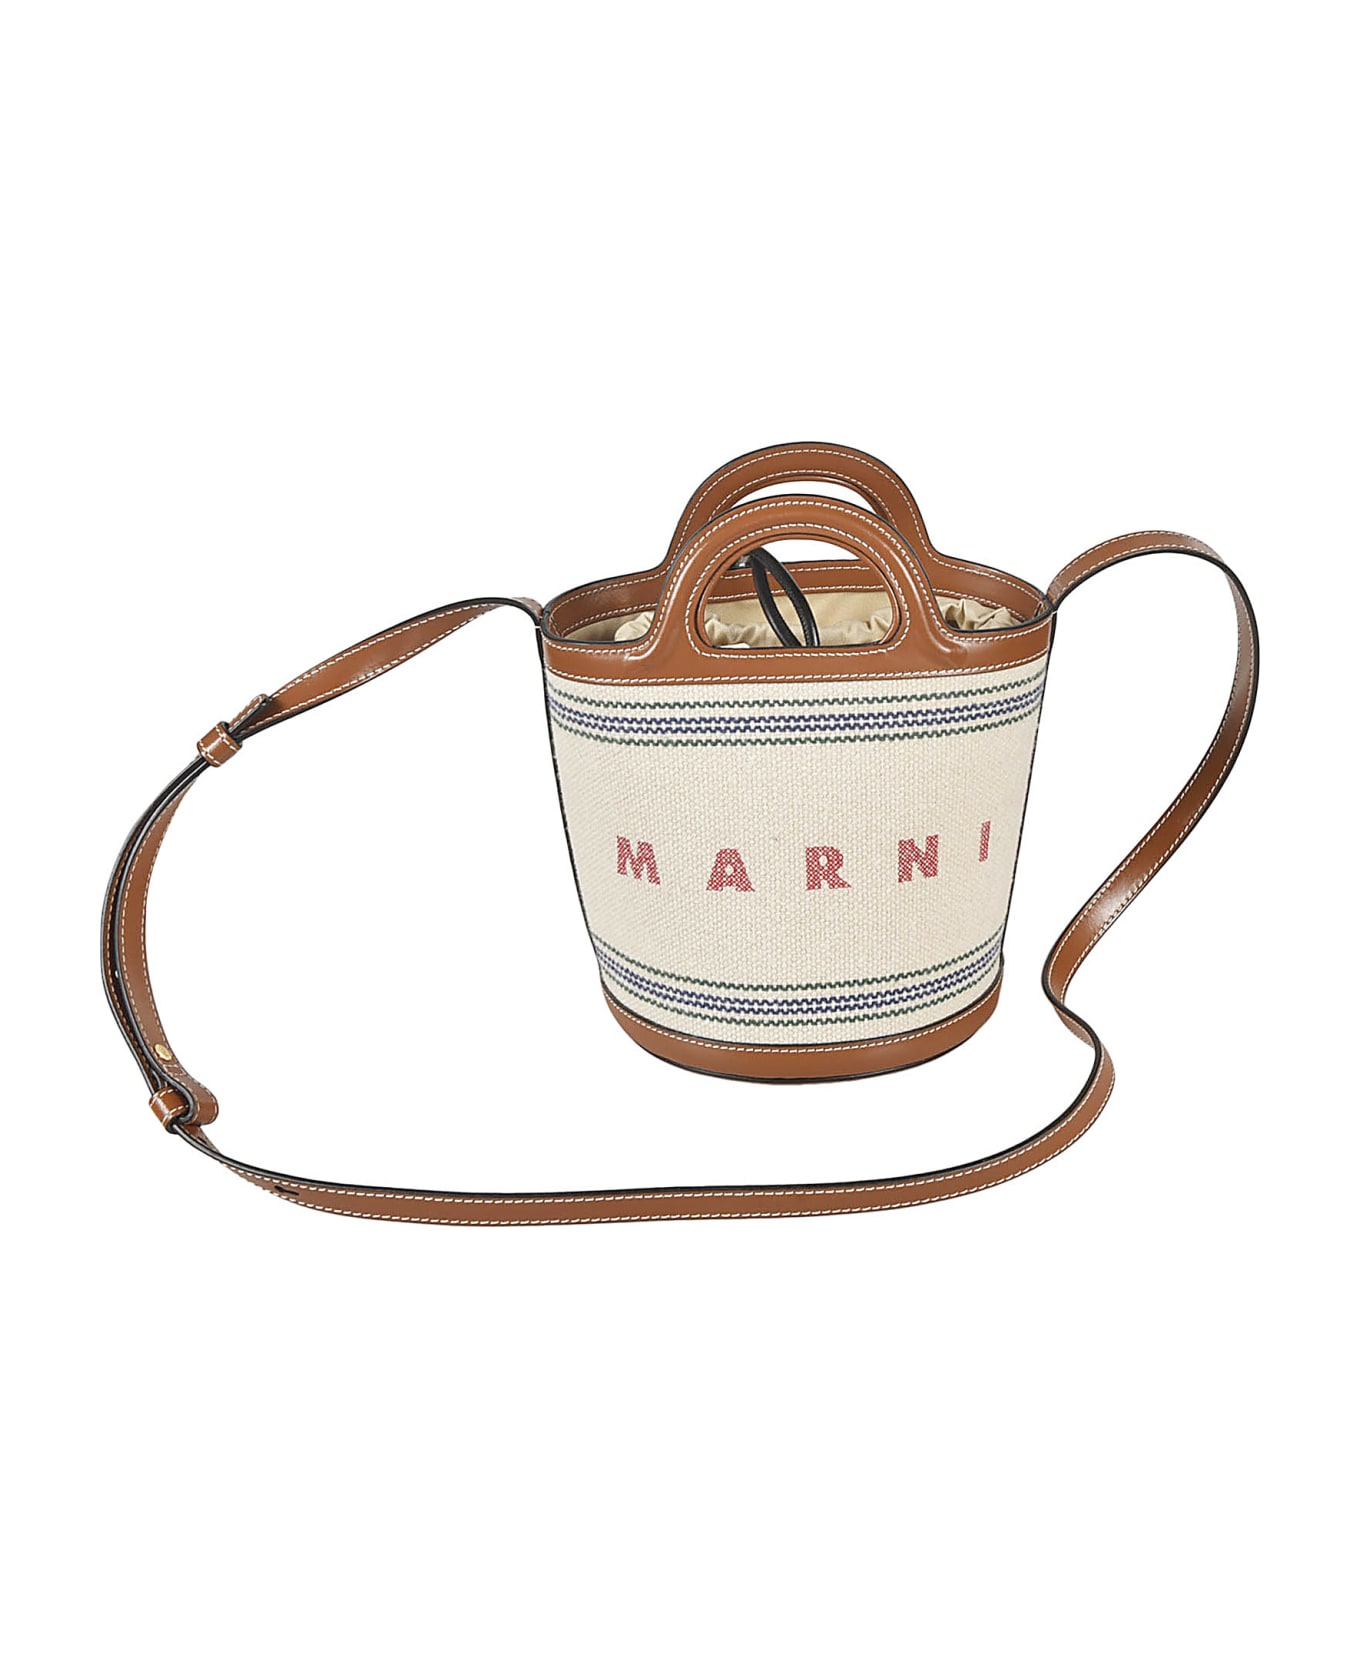 Marni Drawstrnged Shoulder Bag - Cream